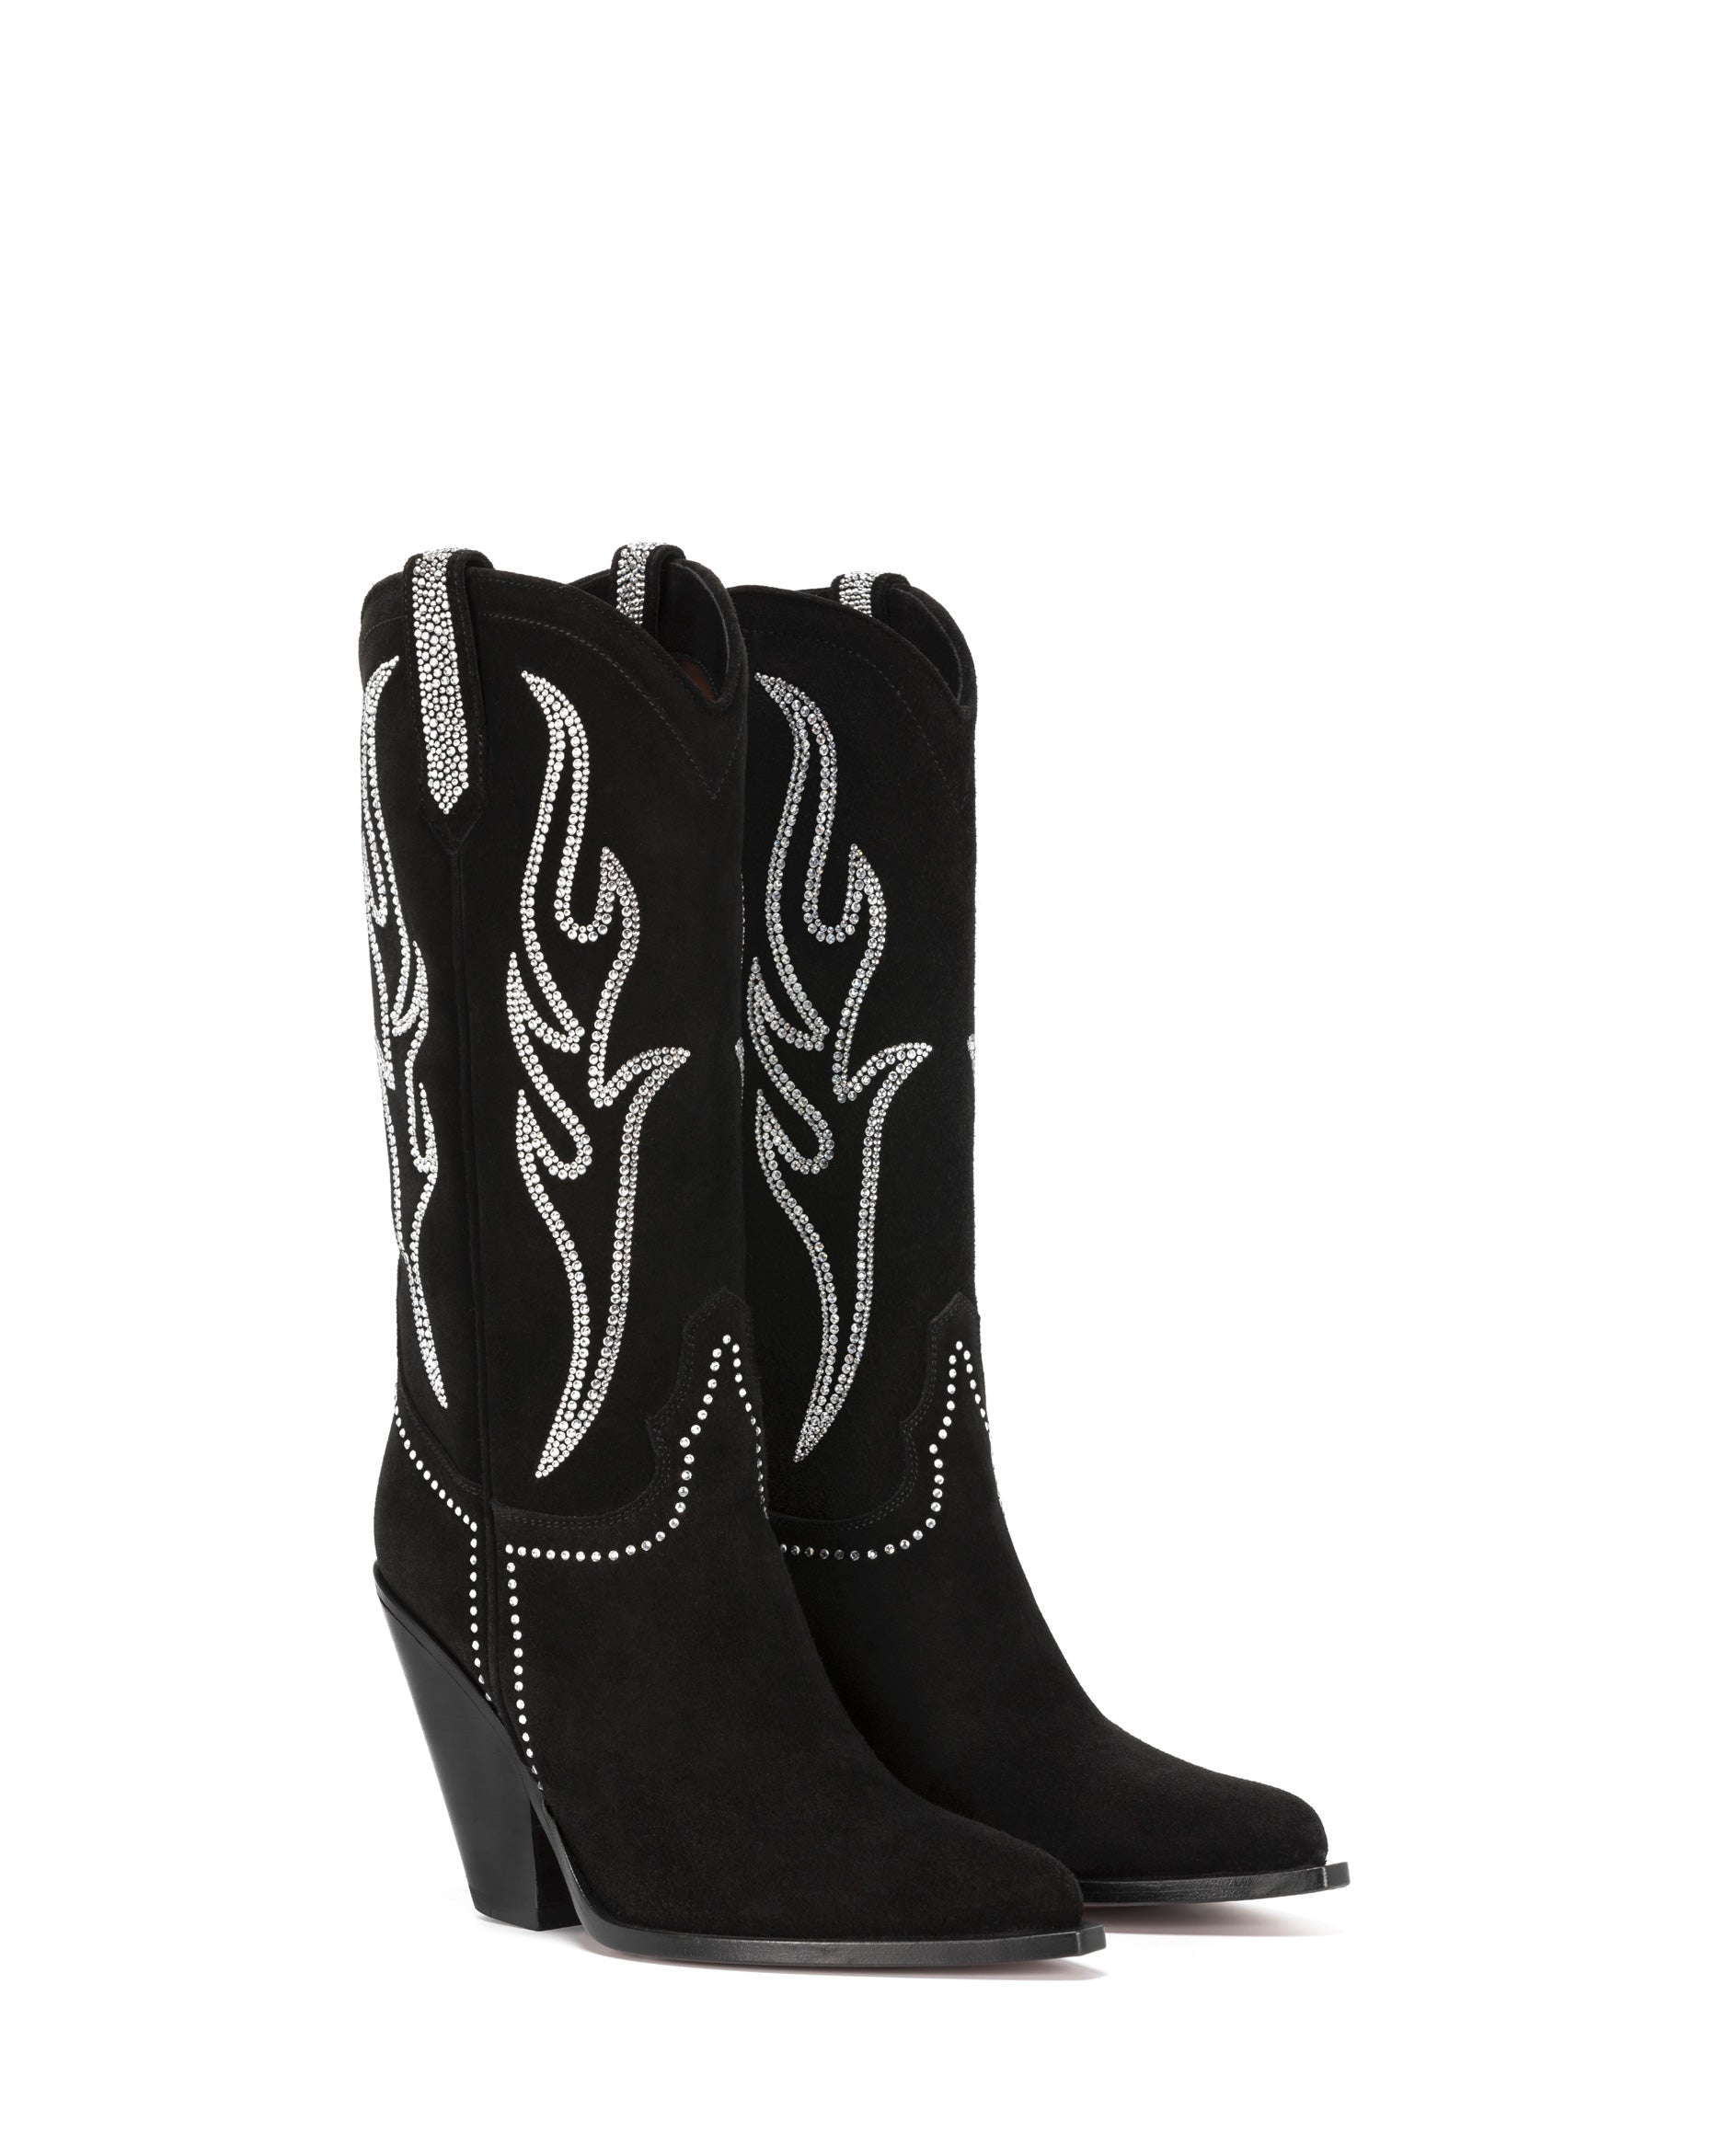 SANTA-FE-90-Women_s-Cowboy-Boots-in-Black-Suede-with-Swarovski-Crystals_02_Front